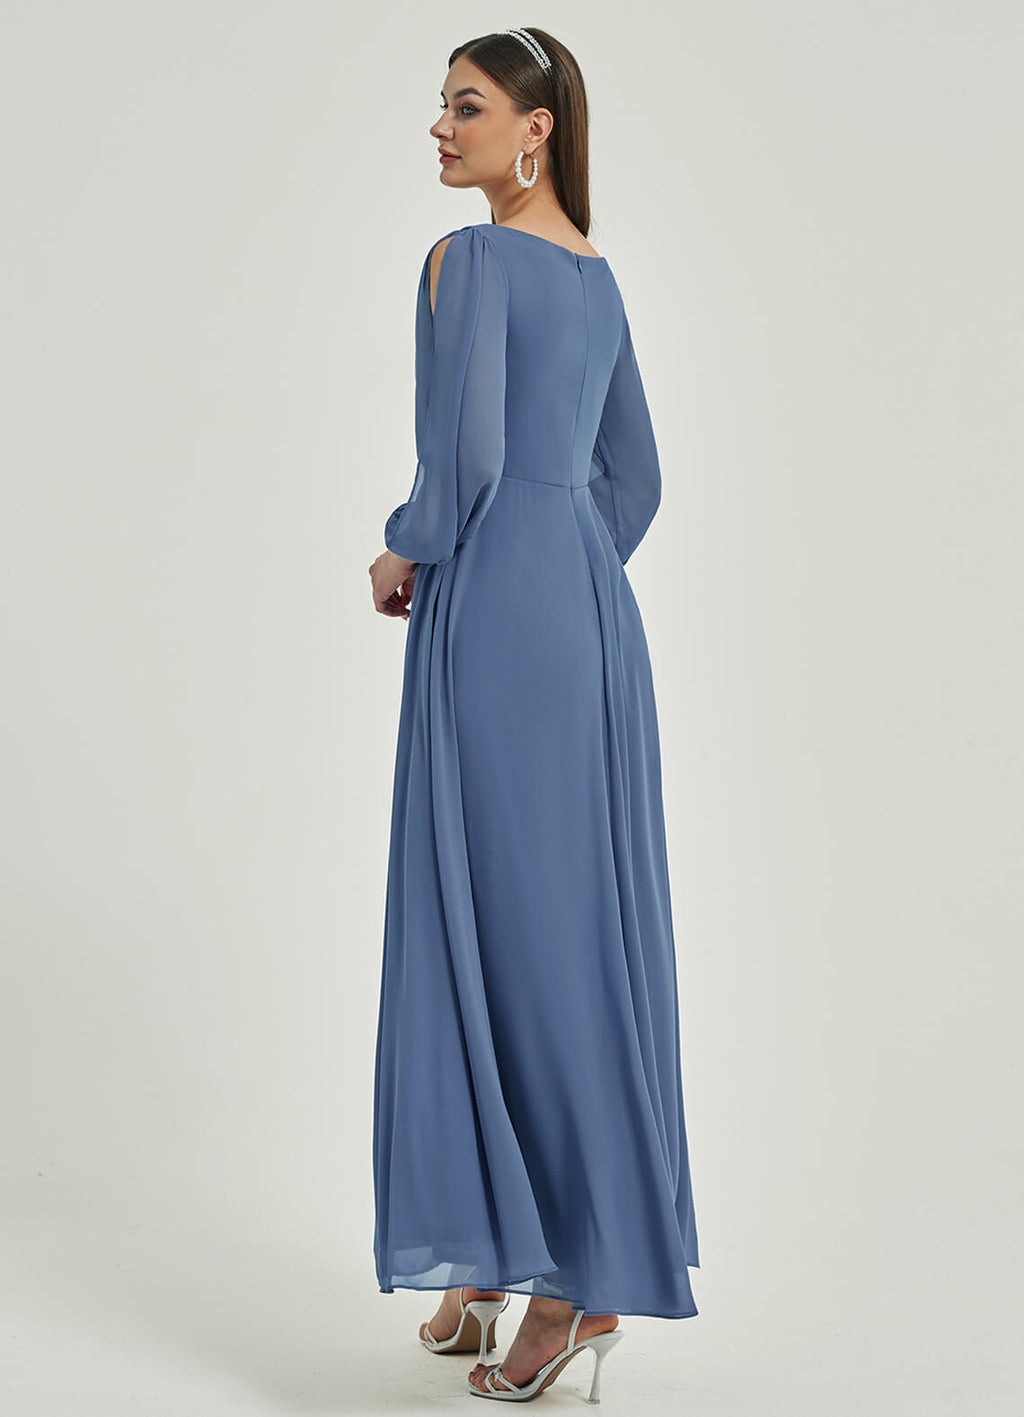 Elegant Slate Blue V Neck Chiffon Empire Long Slit Sleeve Pleated Flowy Formal Dress with Flowers Liv